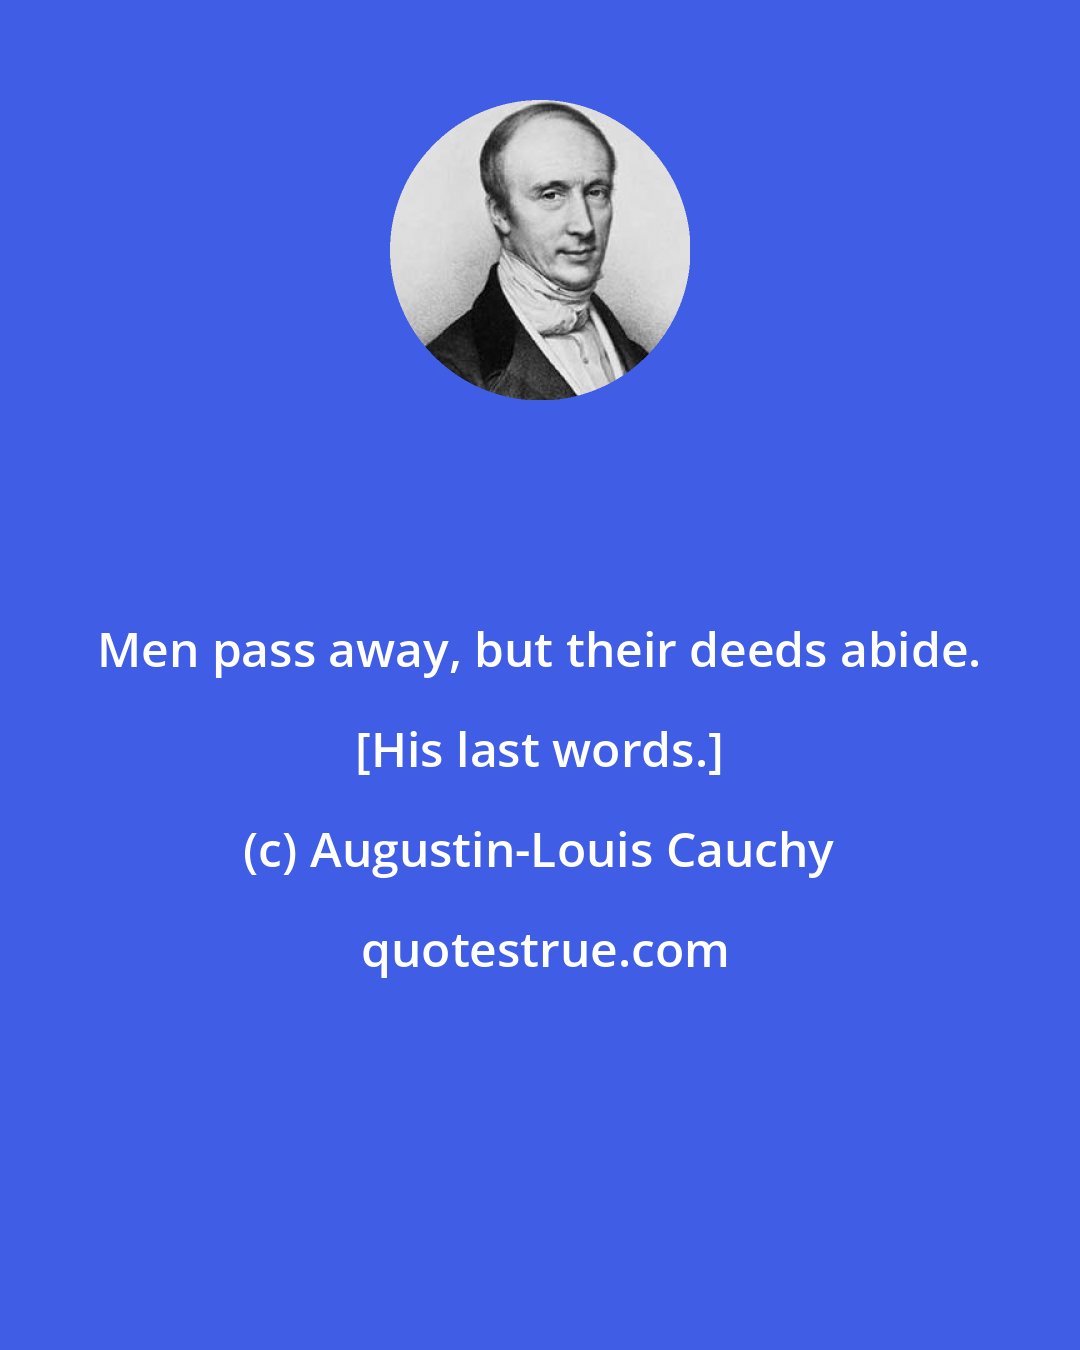 Augustin-Louis Cauchy: Men pass away, but their deeds abide. [His last words.]